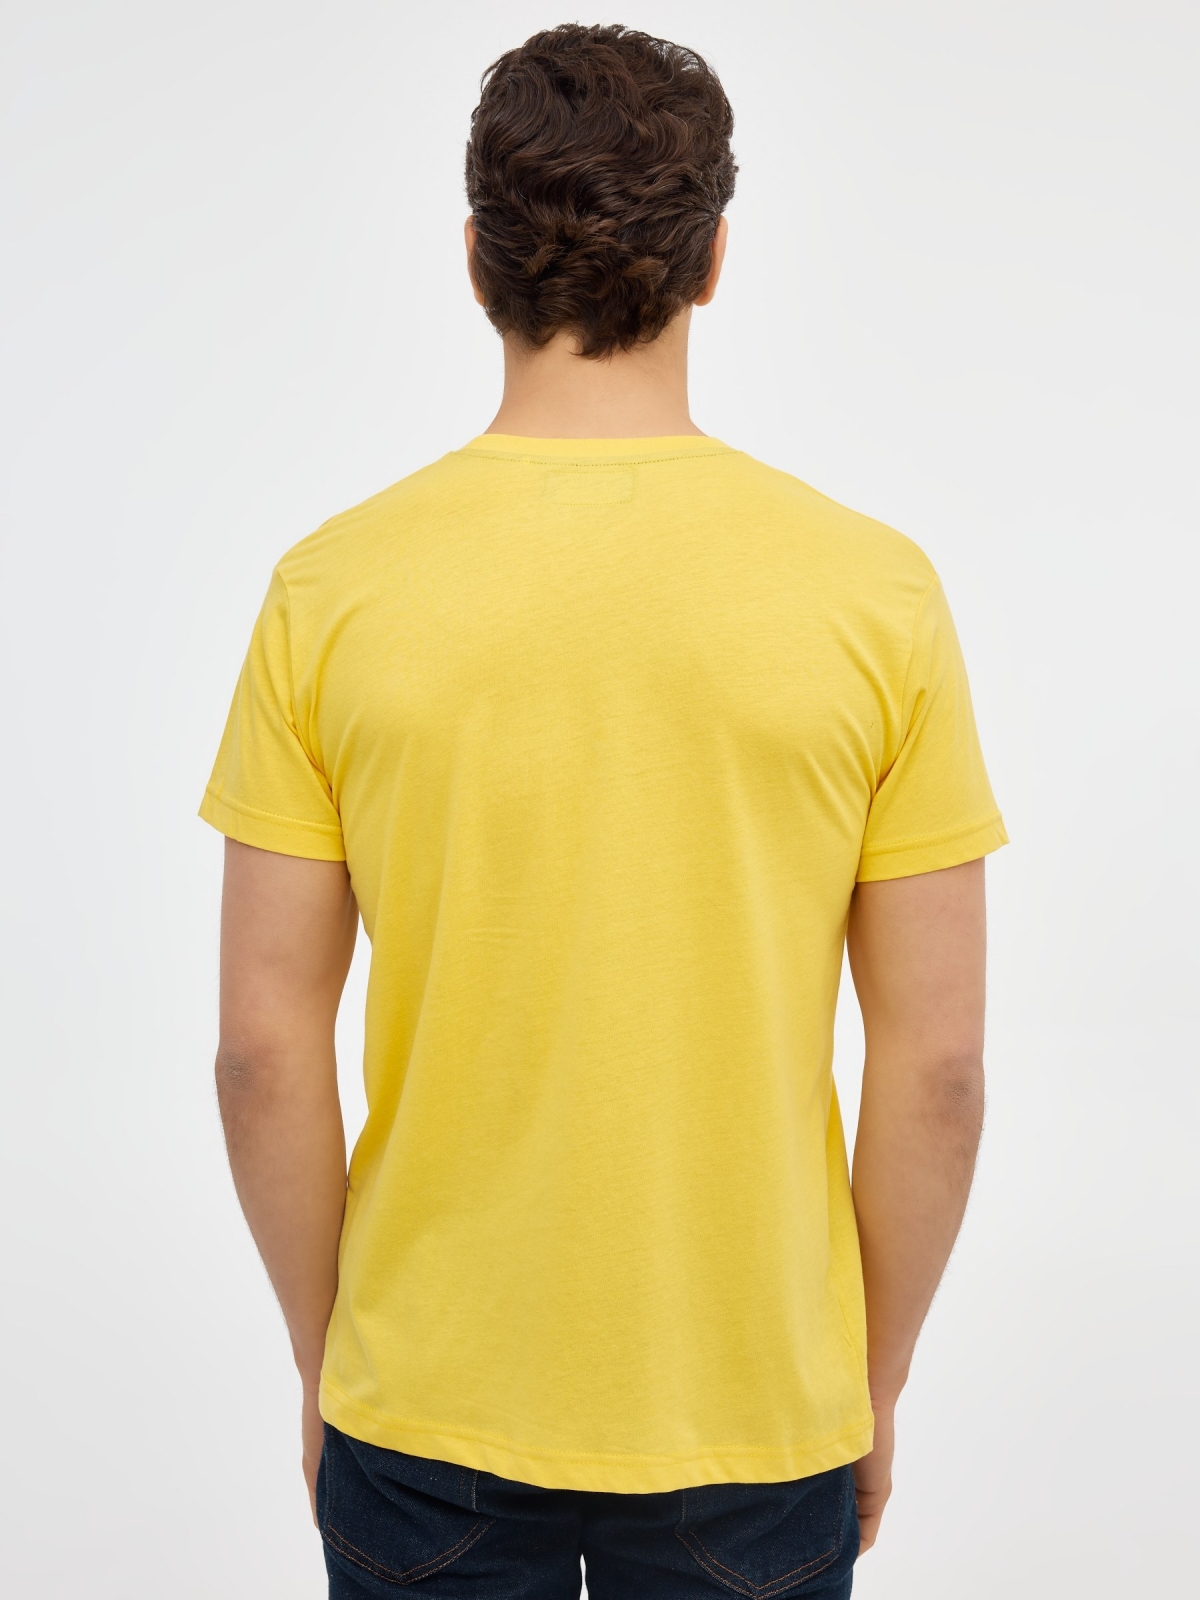 Camiseta básica manga corta amarillo vista media trasera